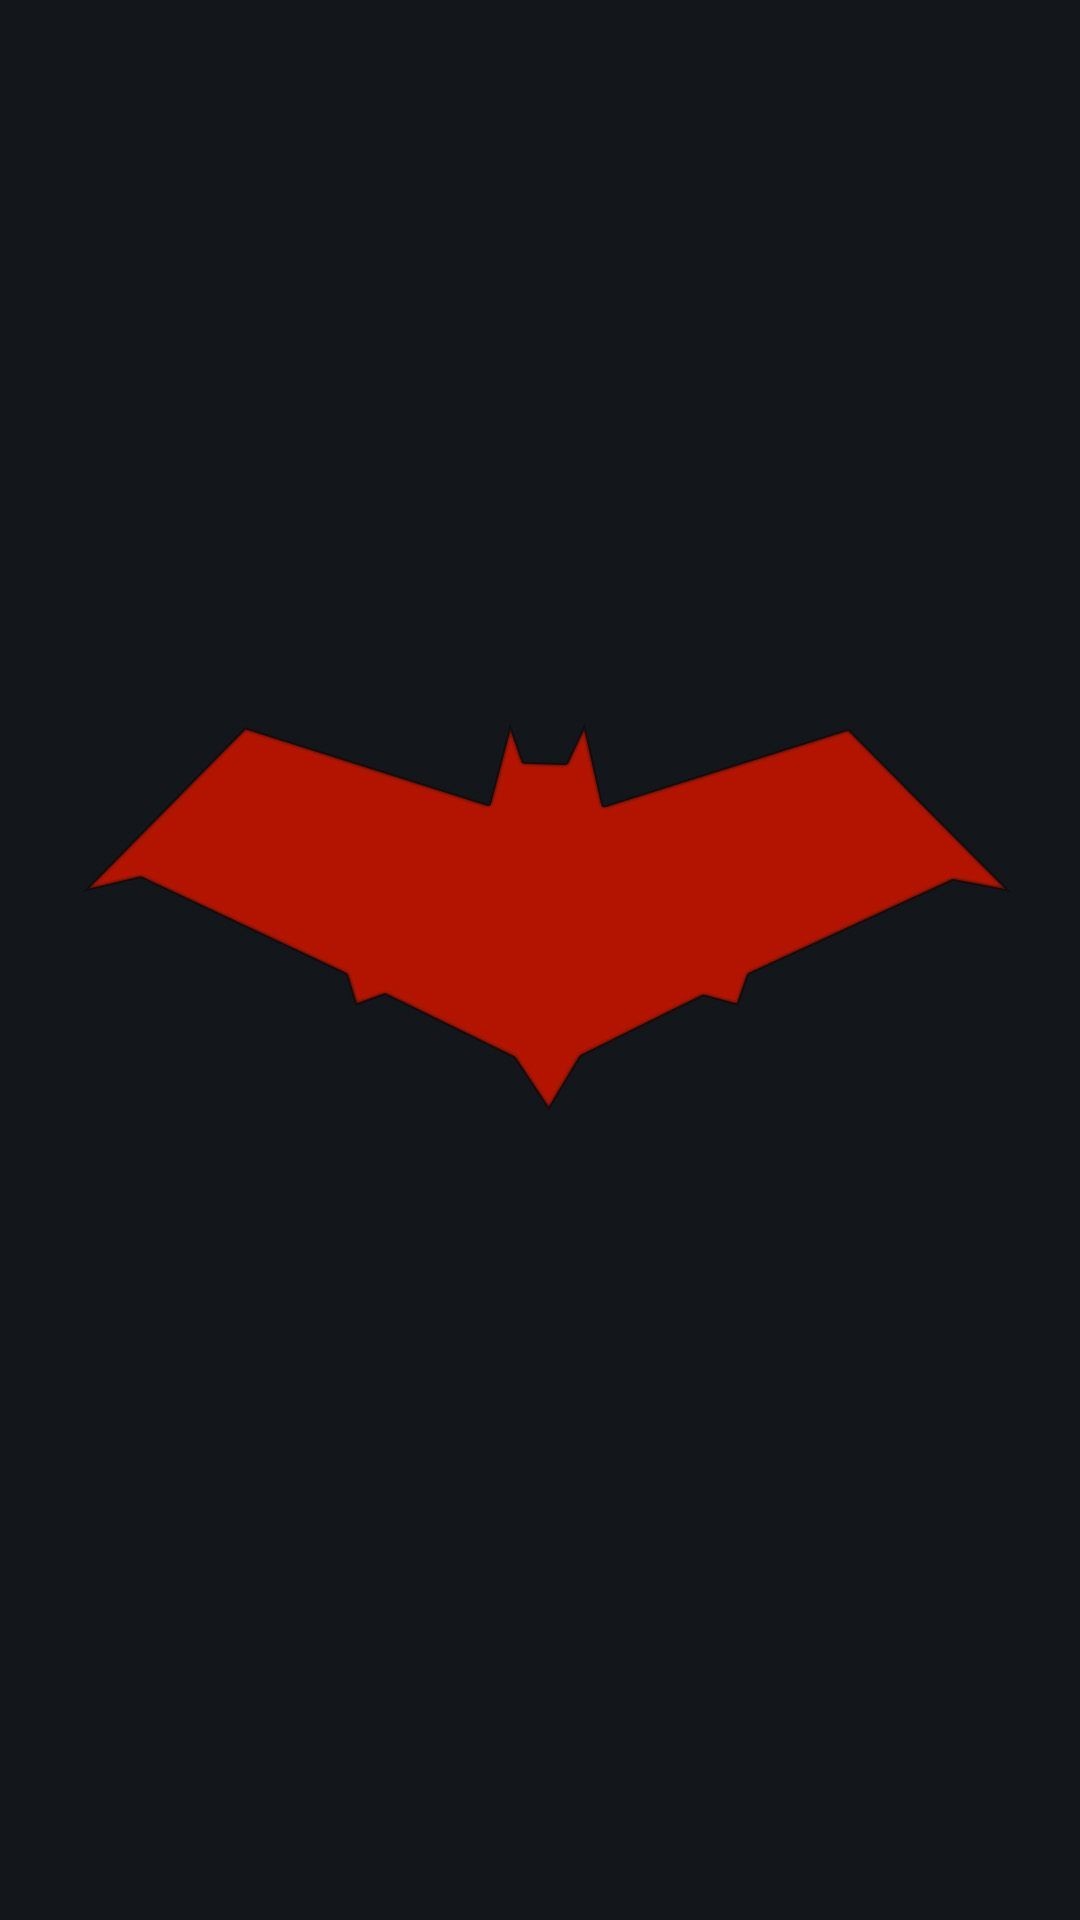 1080x1920 Download Batman Highlight Wallpaper For iPhone Ã Batman